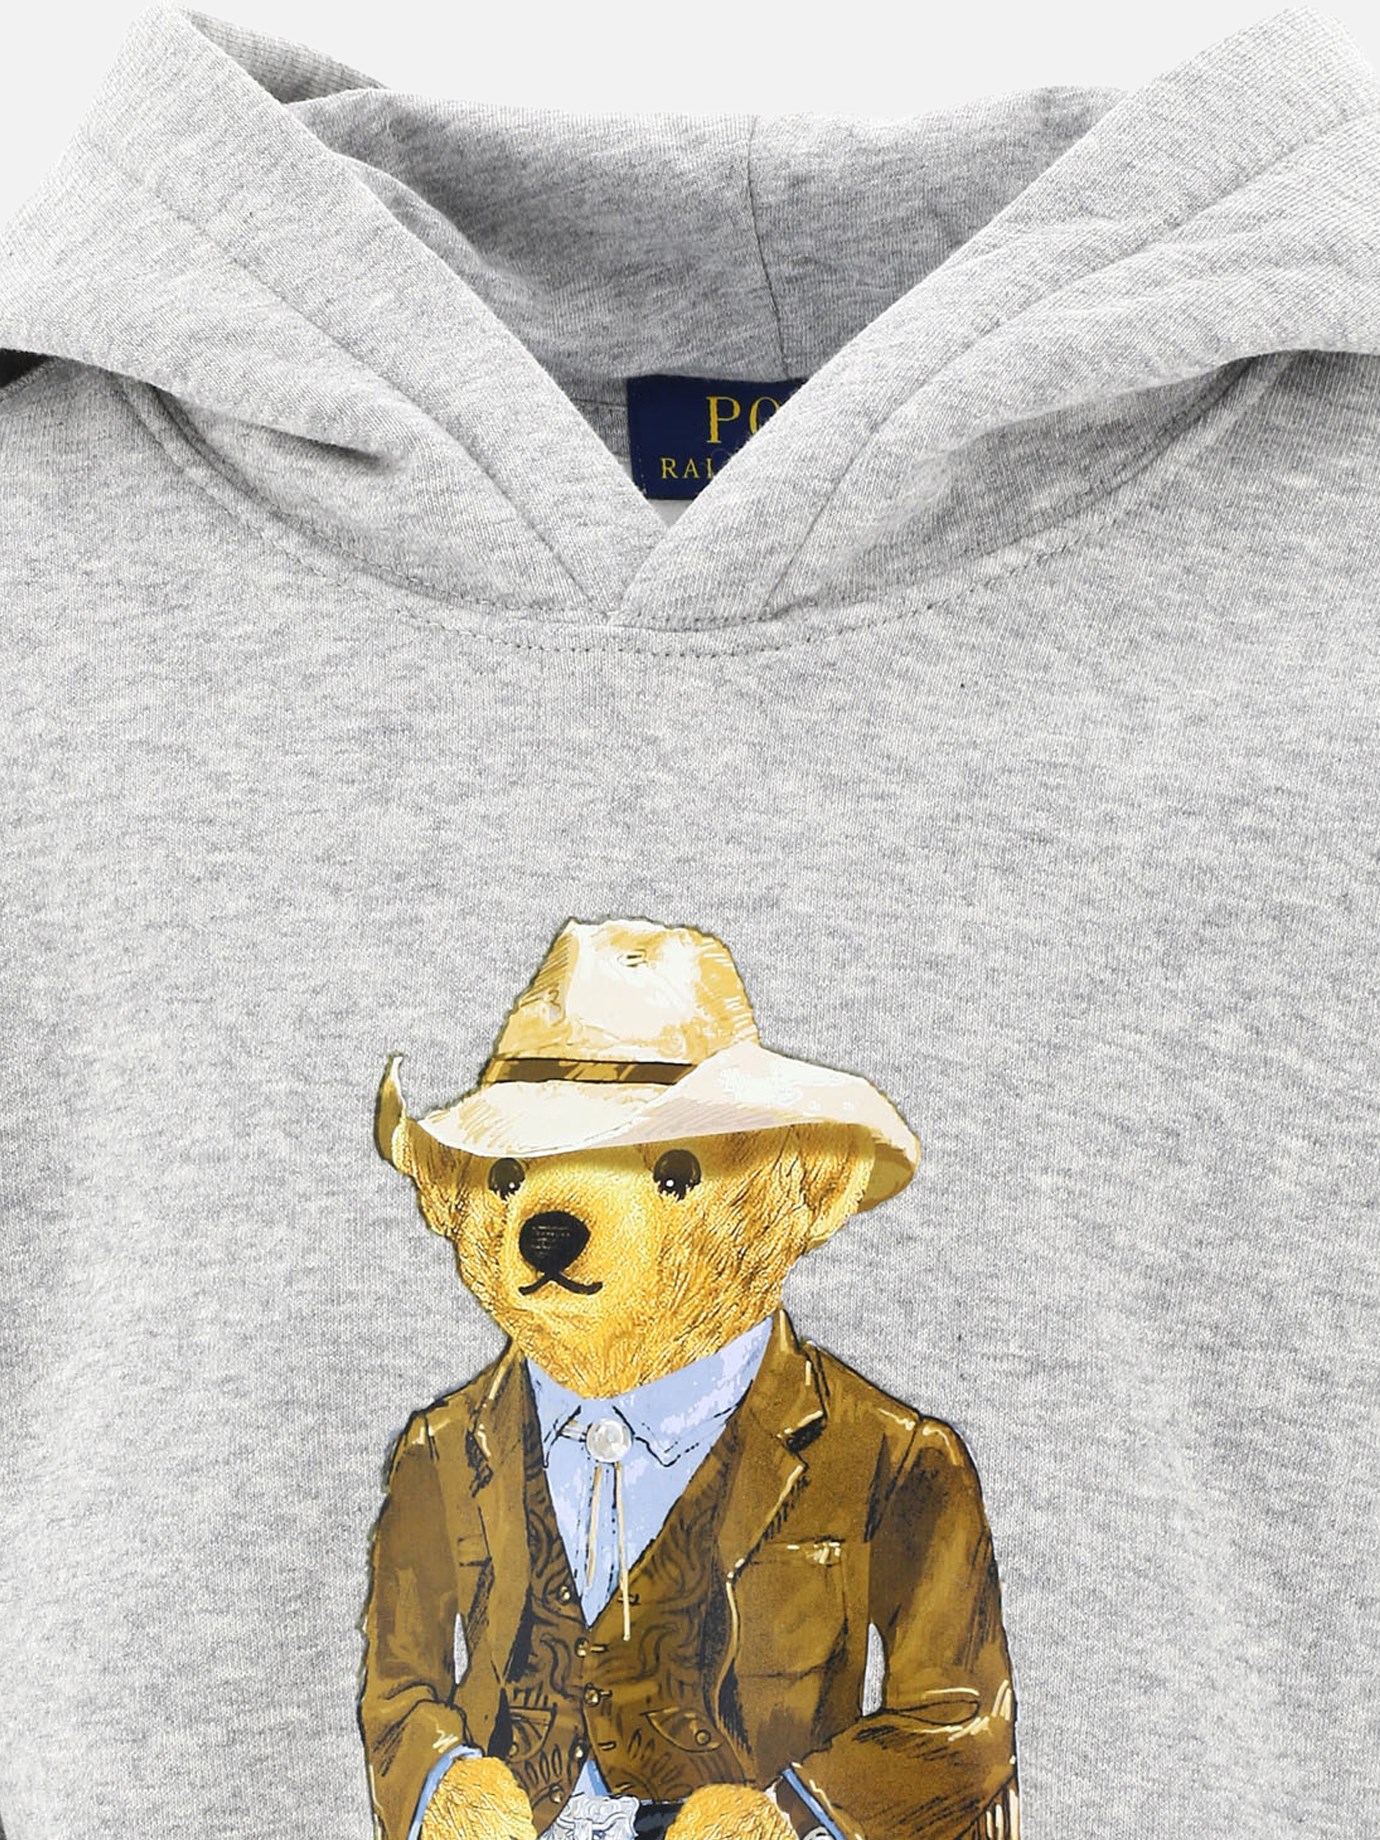  Polo Bear  hoodie by Ralph Lauren Kids